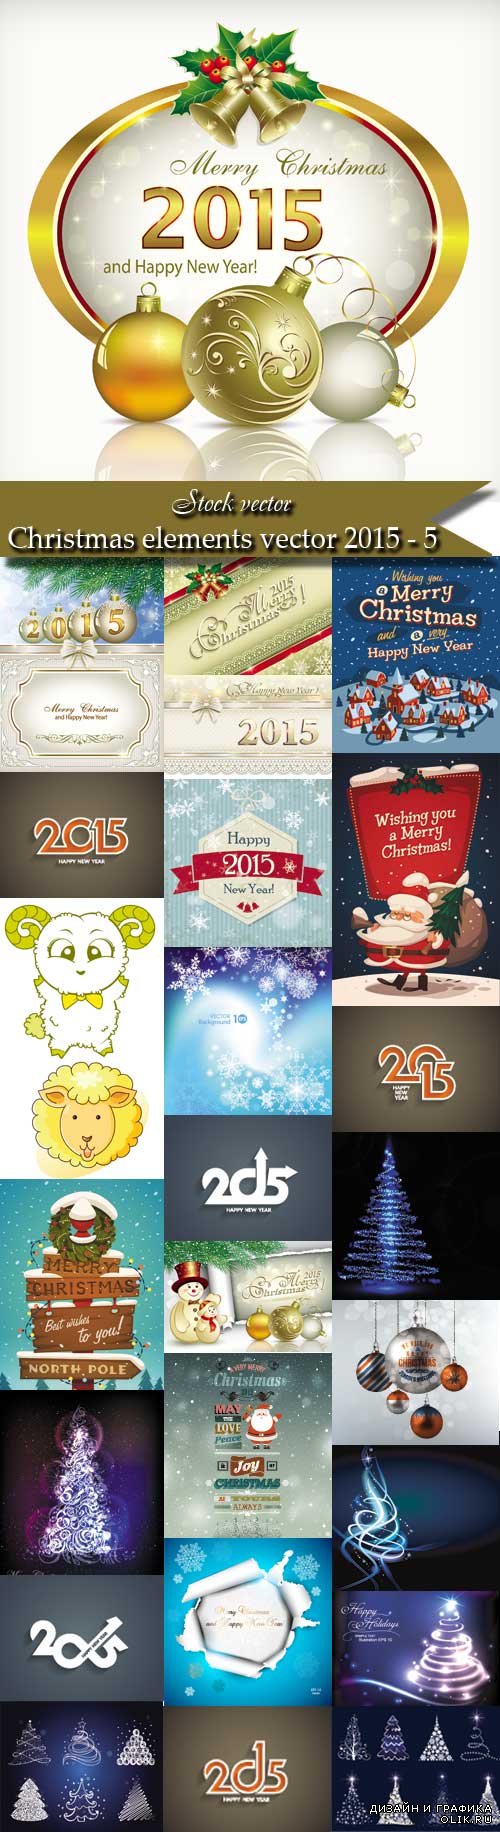 Christmas elements vector 2015 - 5